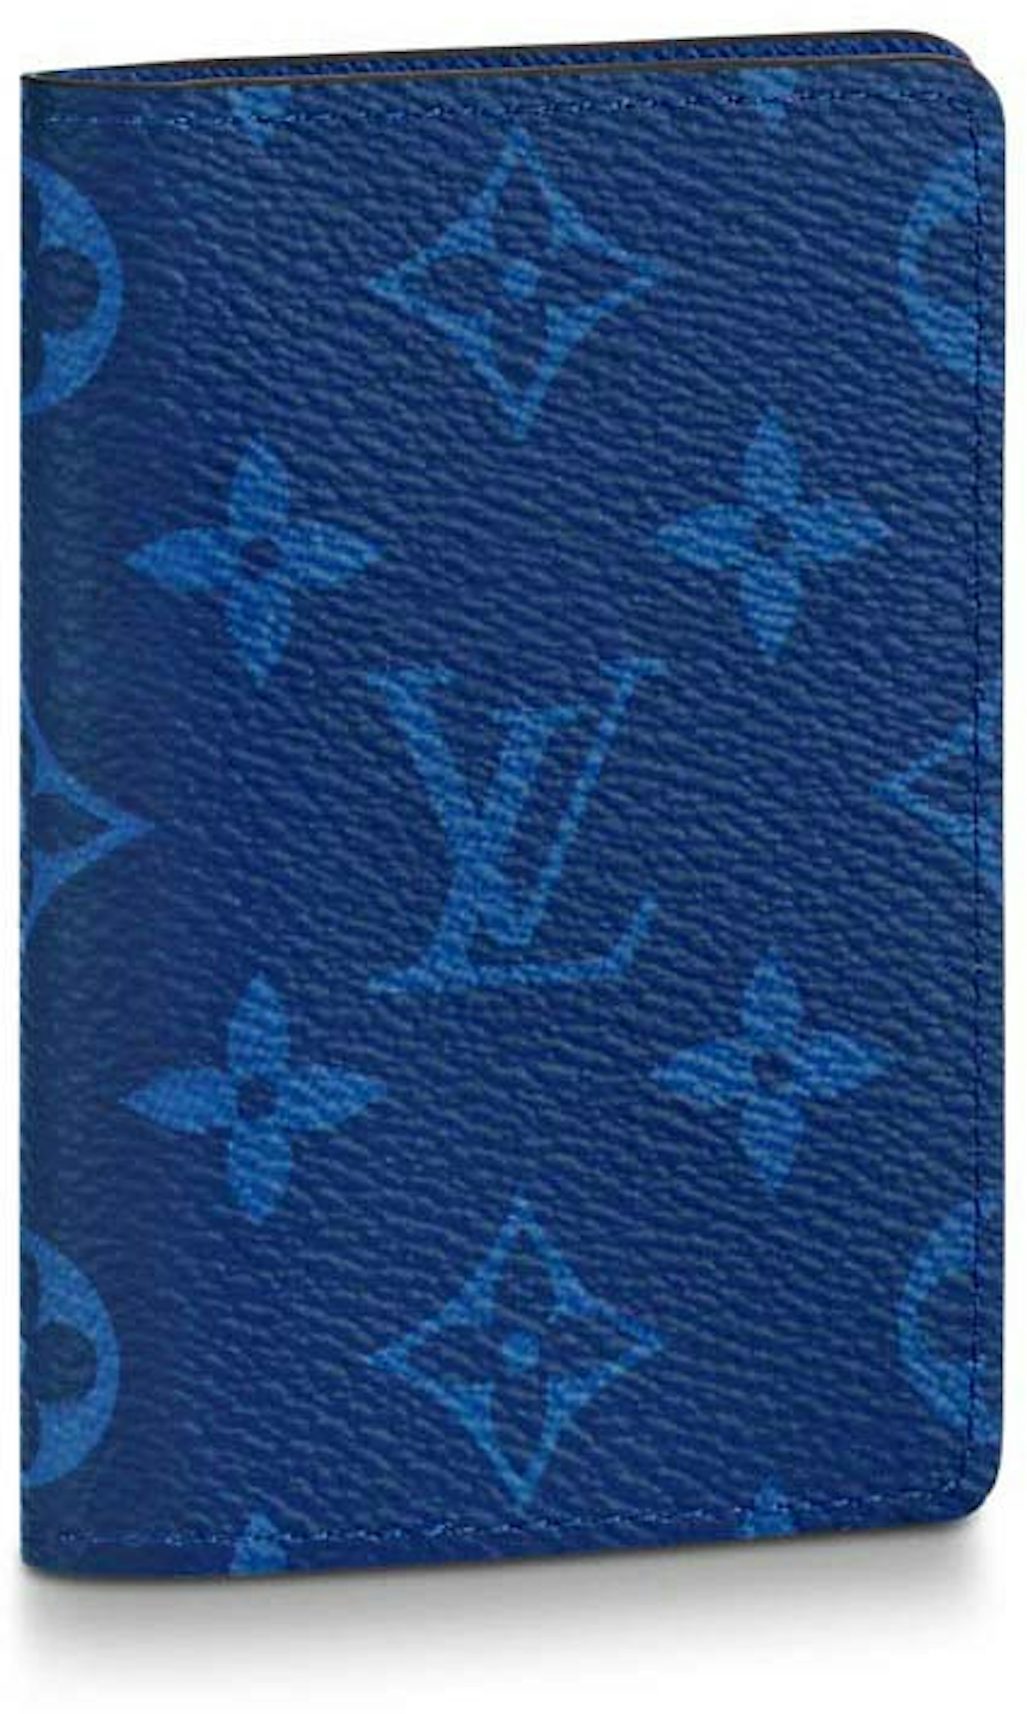 Pocket Organiser - Luxury Taigarama Blue